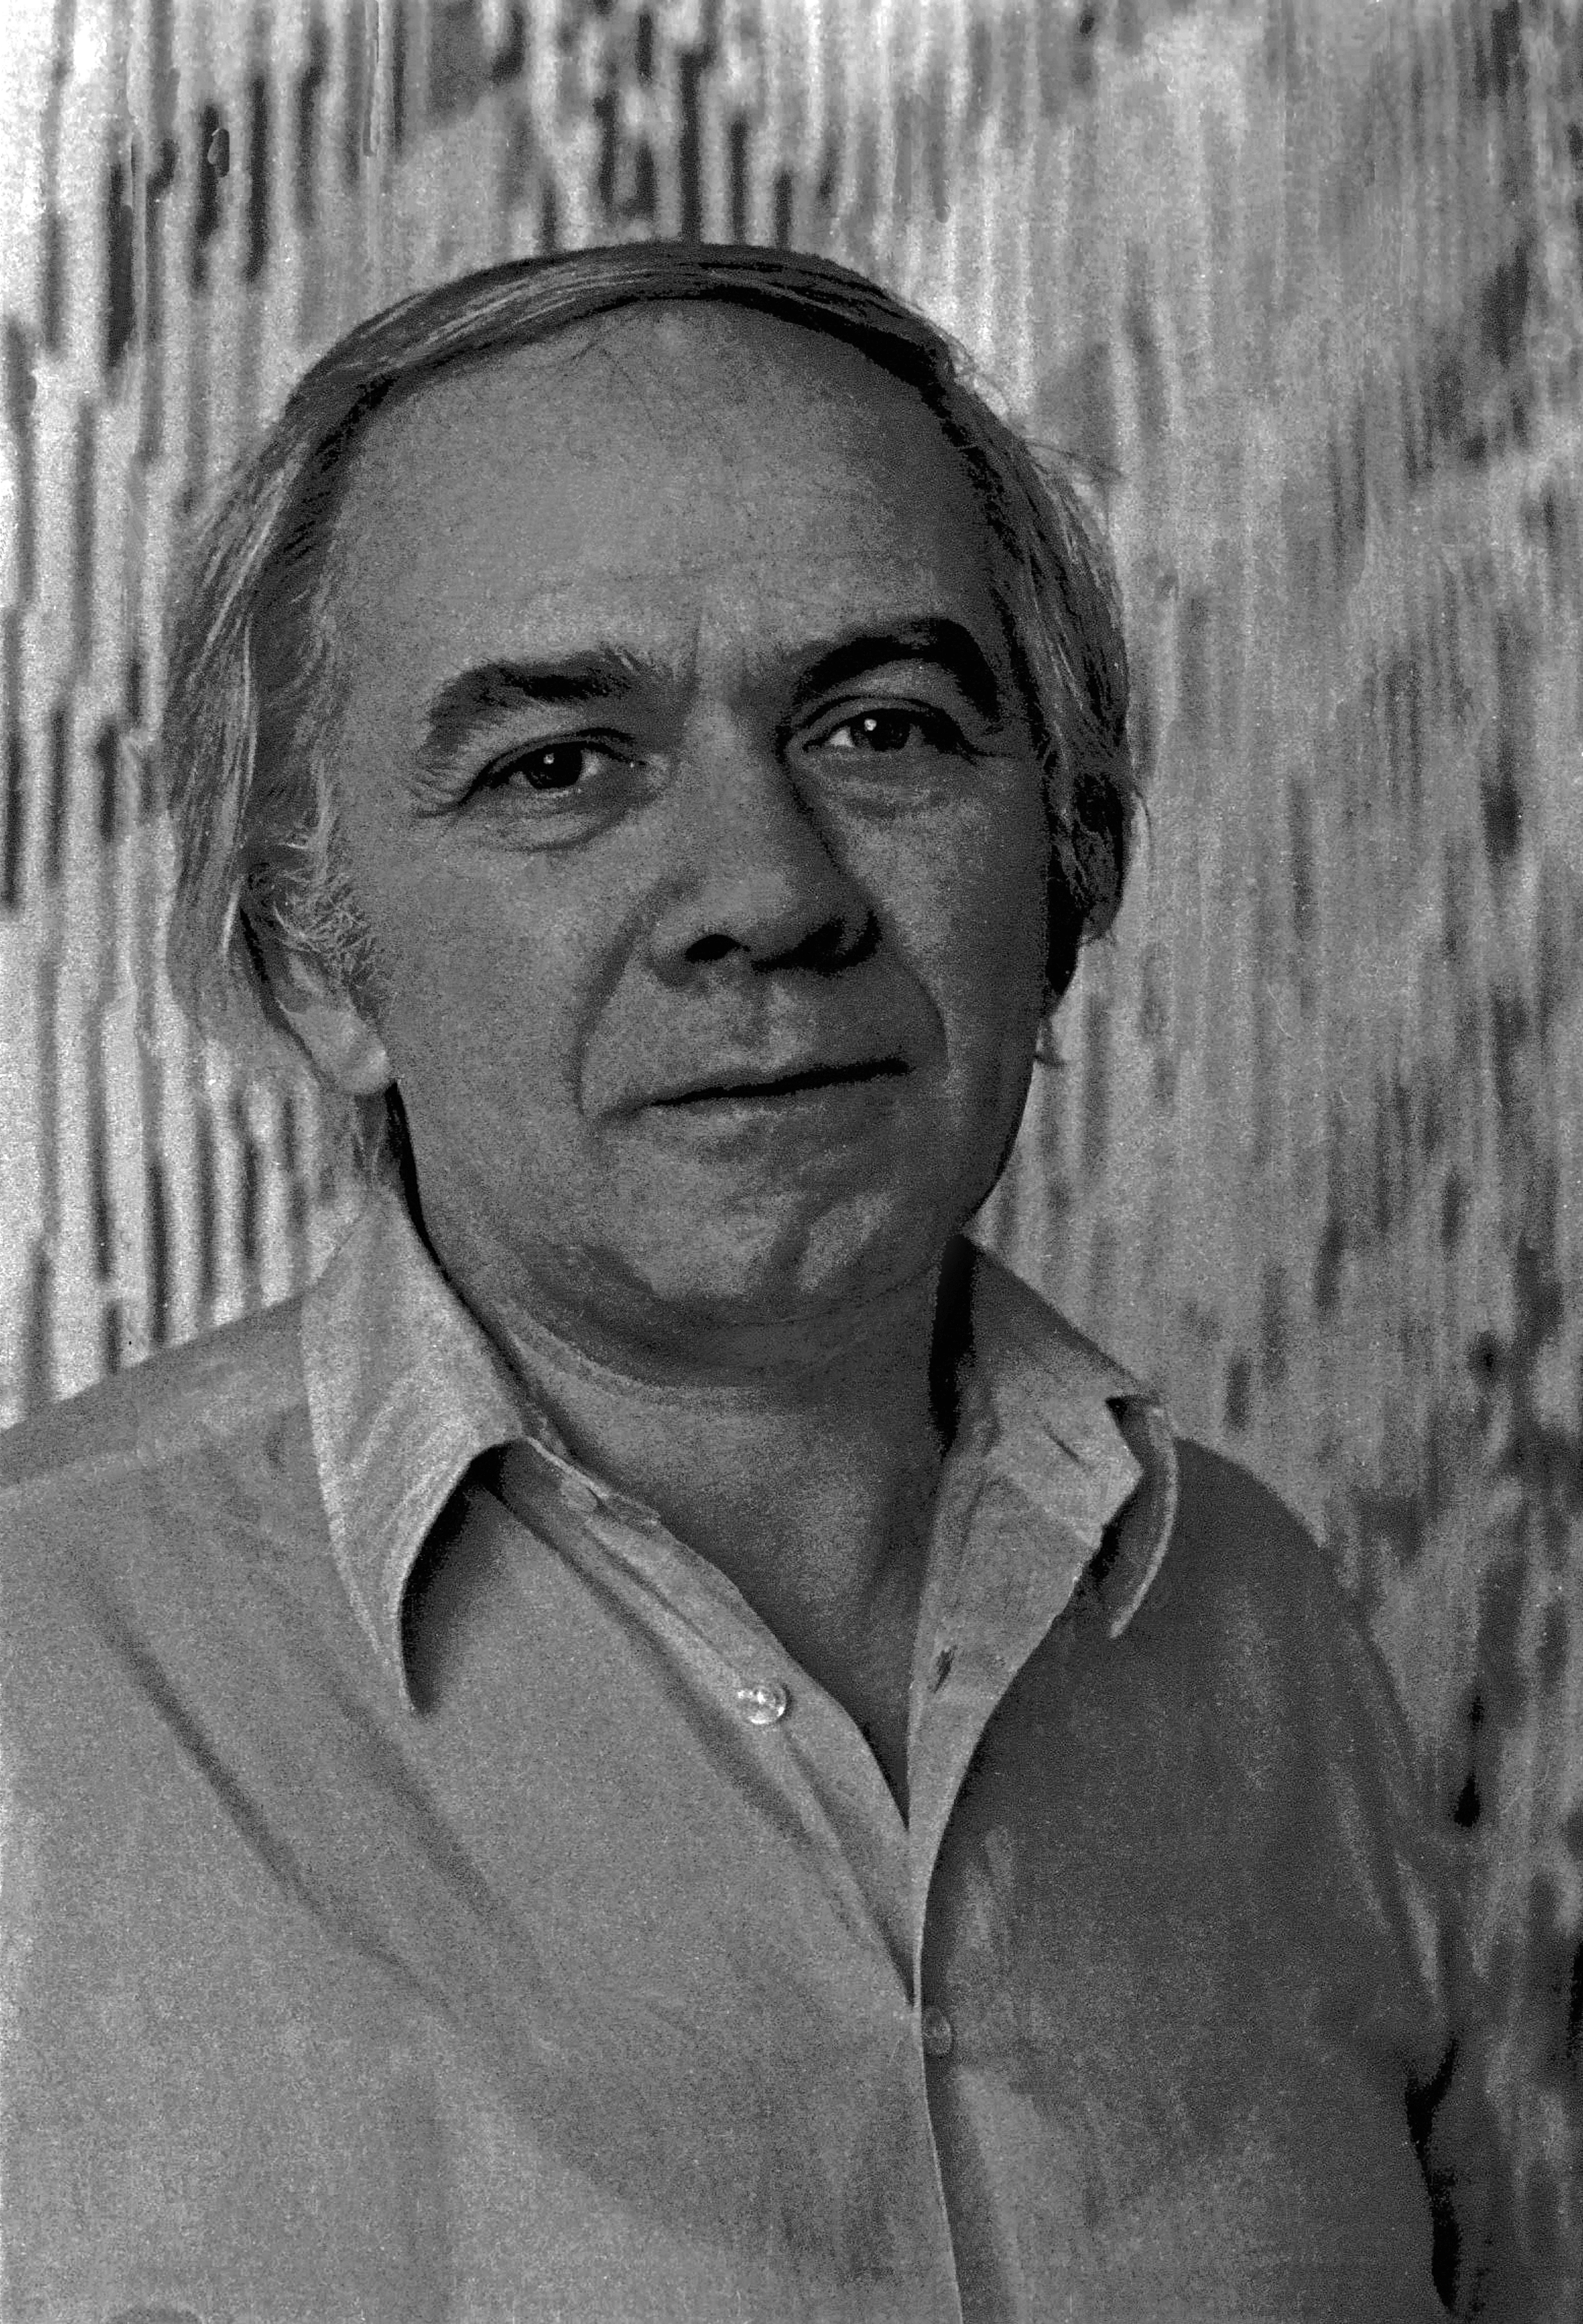 Johannes Geccelli (1975)